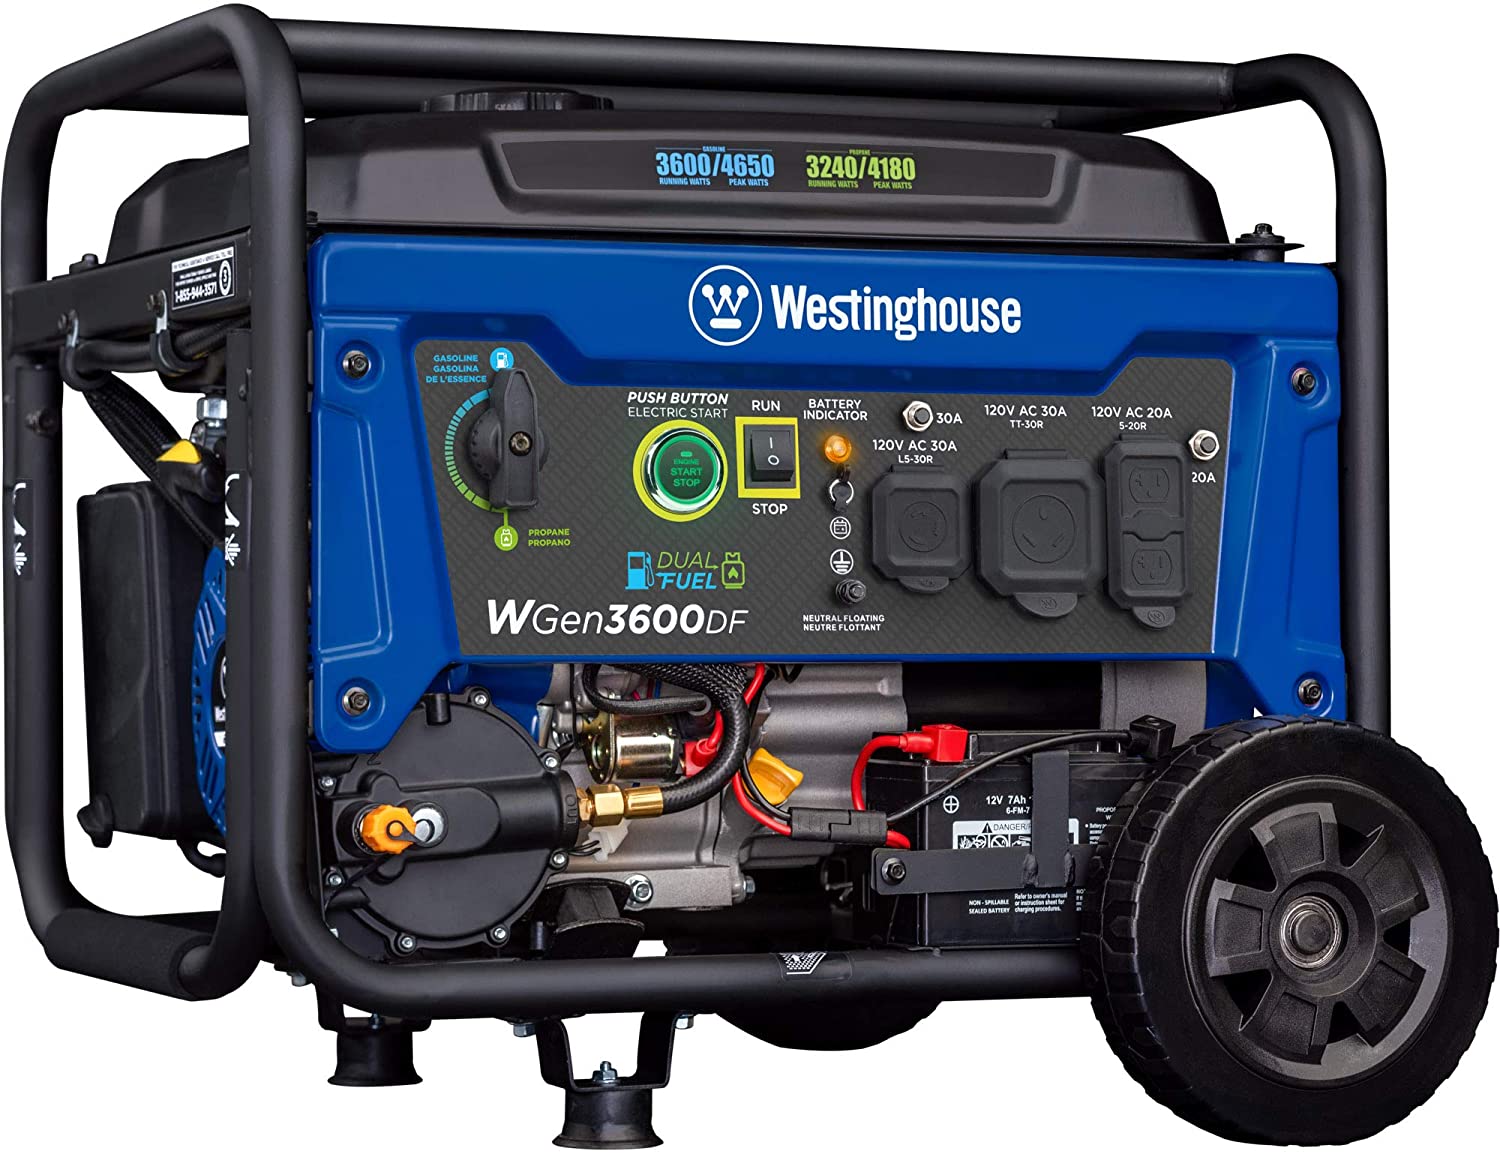 3600W Westinghouse WGen3600DF Dual Fuel Electric Start Portable Generator (4650 Peak Watts) $424 + free s/h at Amazon